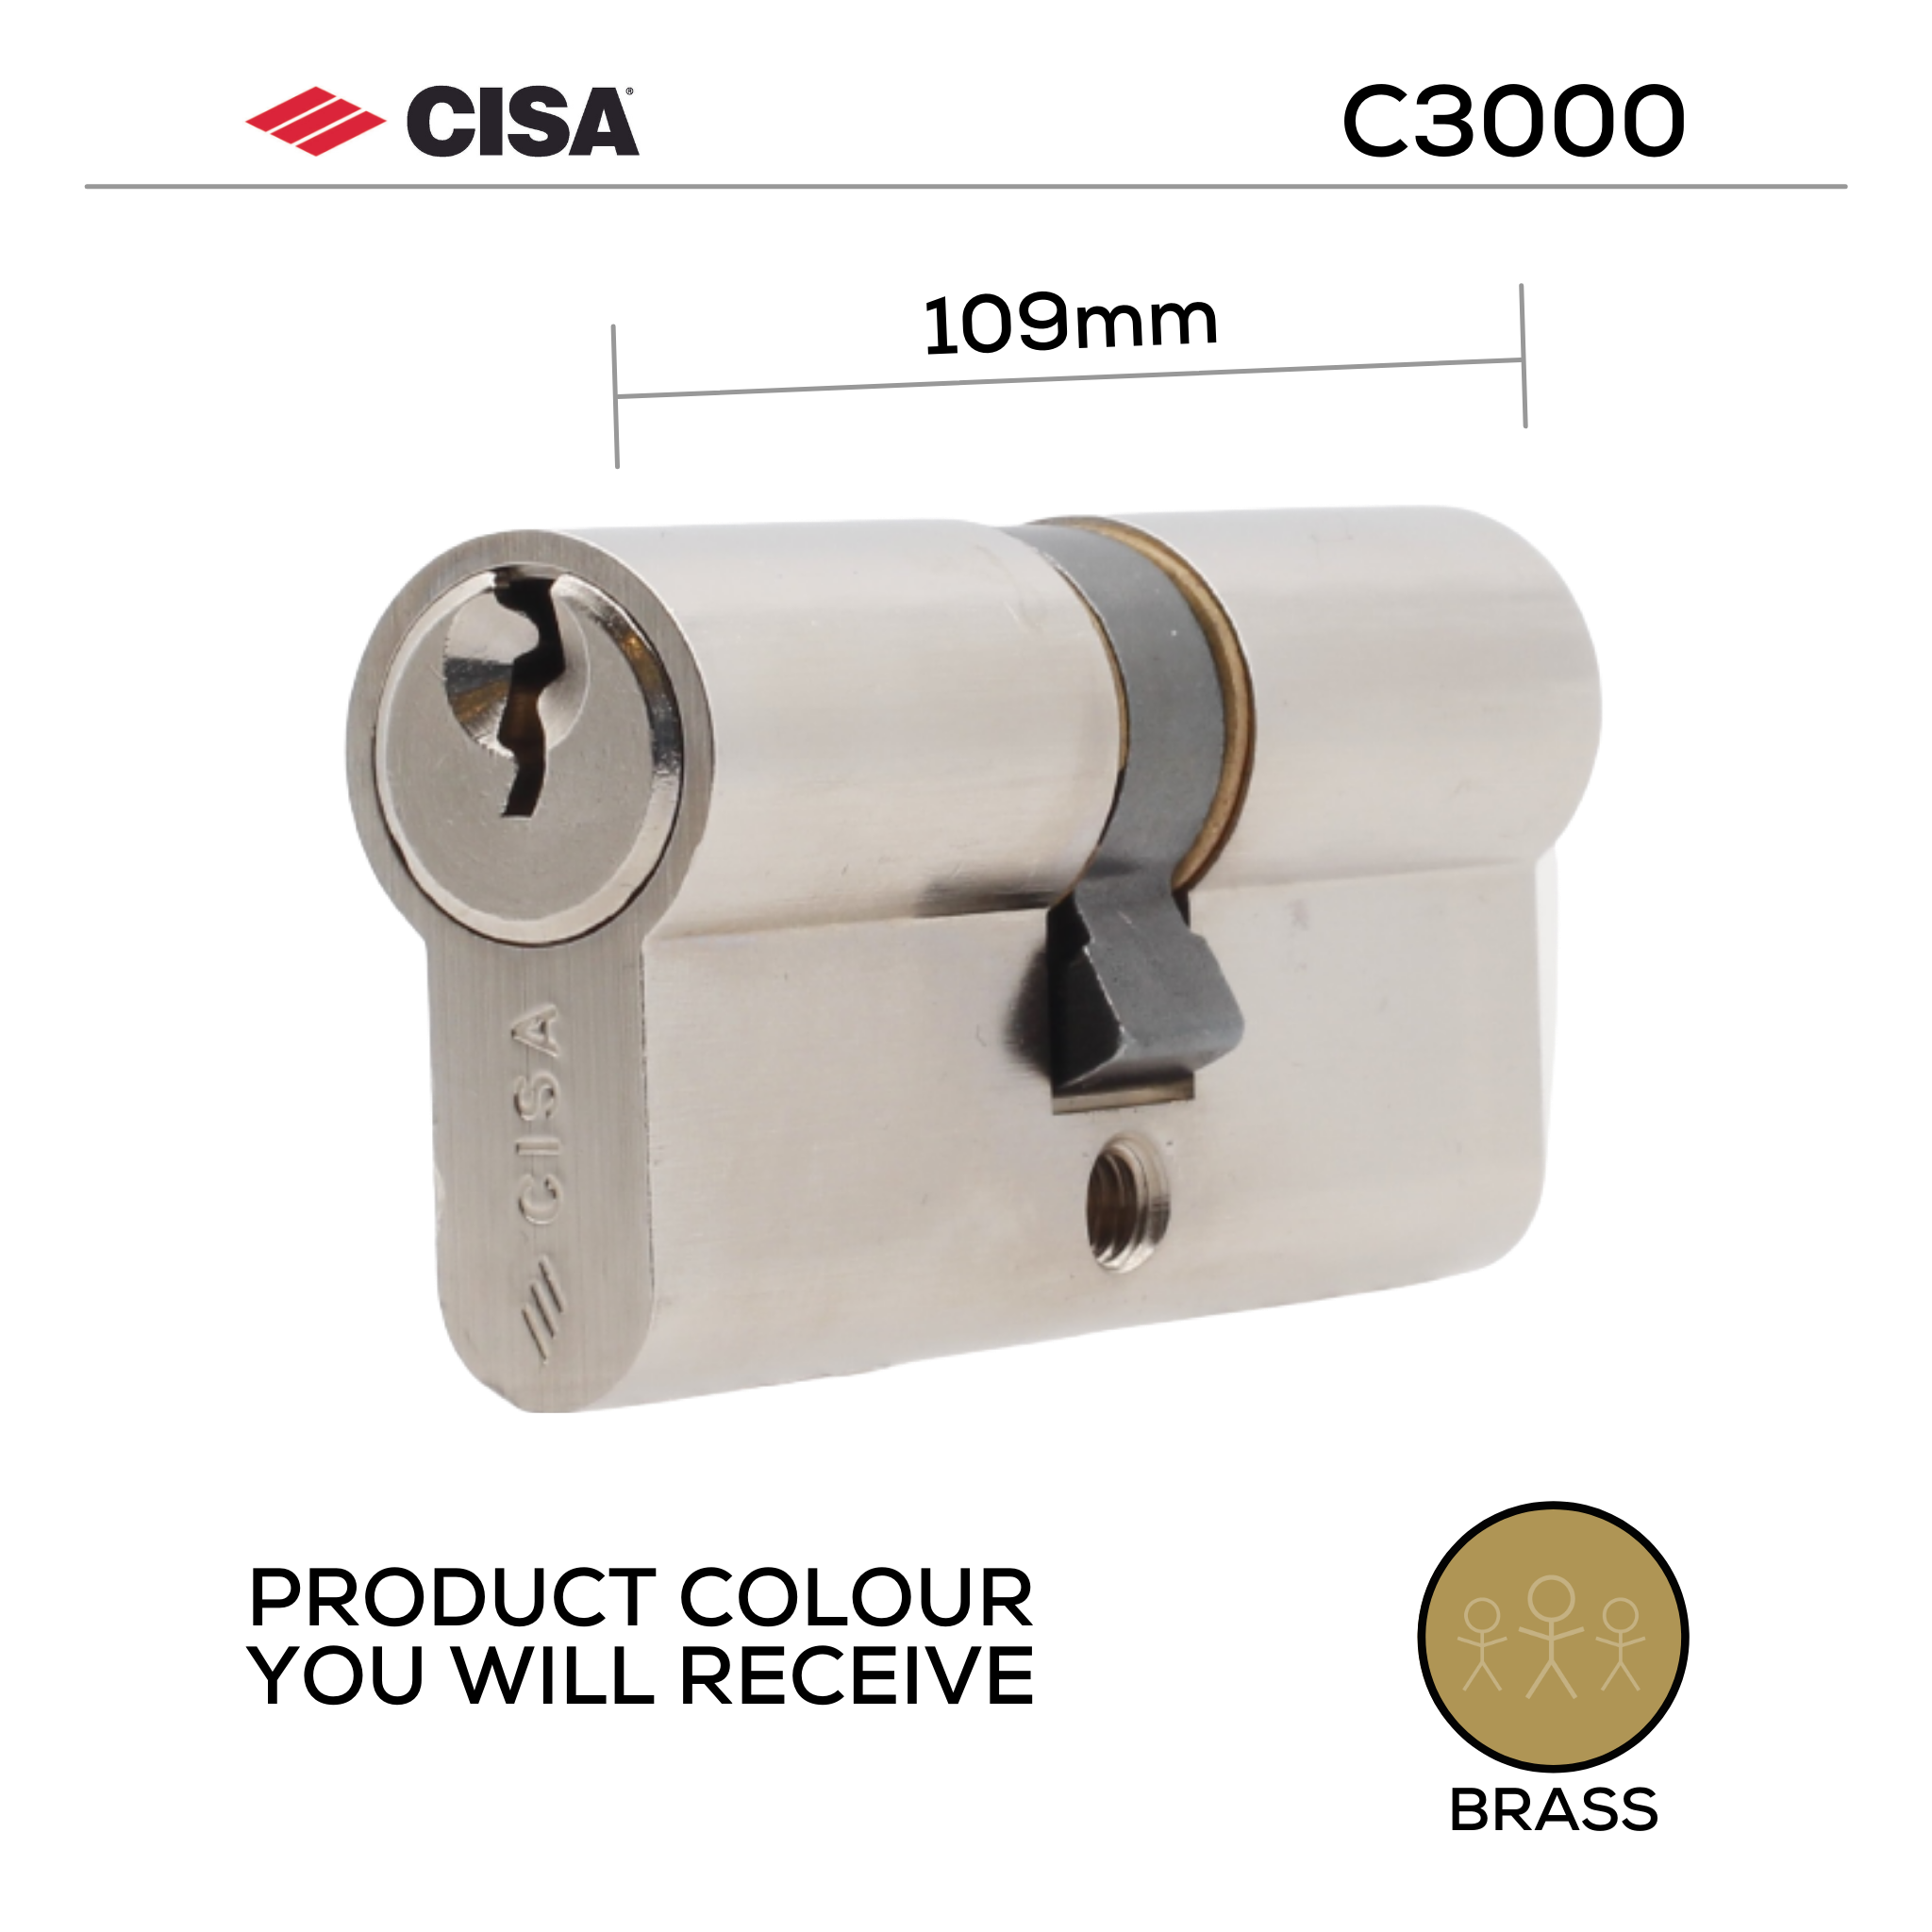 0N310-70-00-KD, 109mm - 54.5/54.5, Double Cylinder, C3000, Key to Key, Keyed to Differ (Standard), 3 Keys, 6 Pin, Brass, CISA